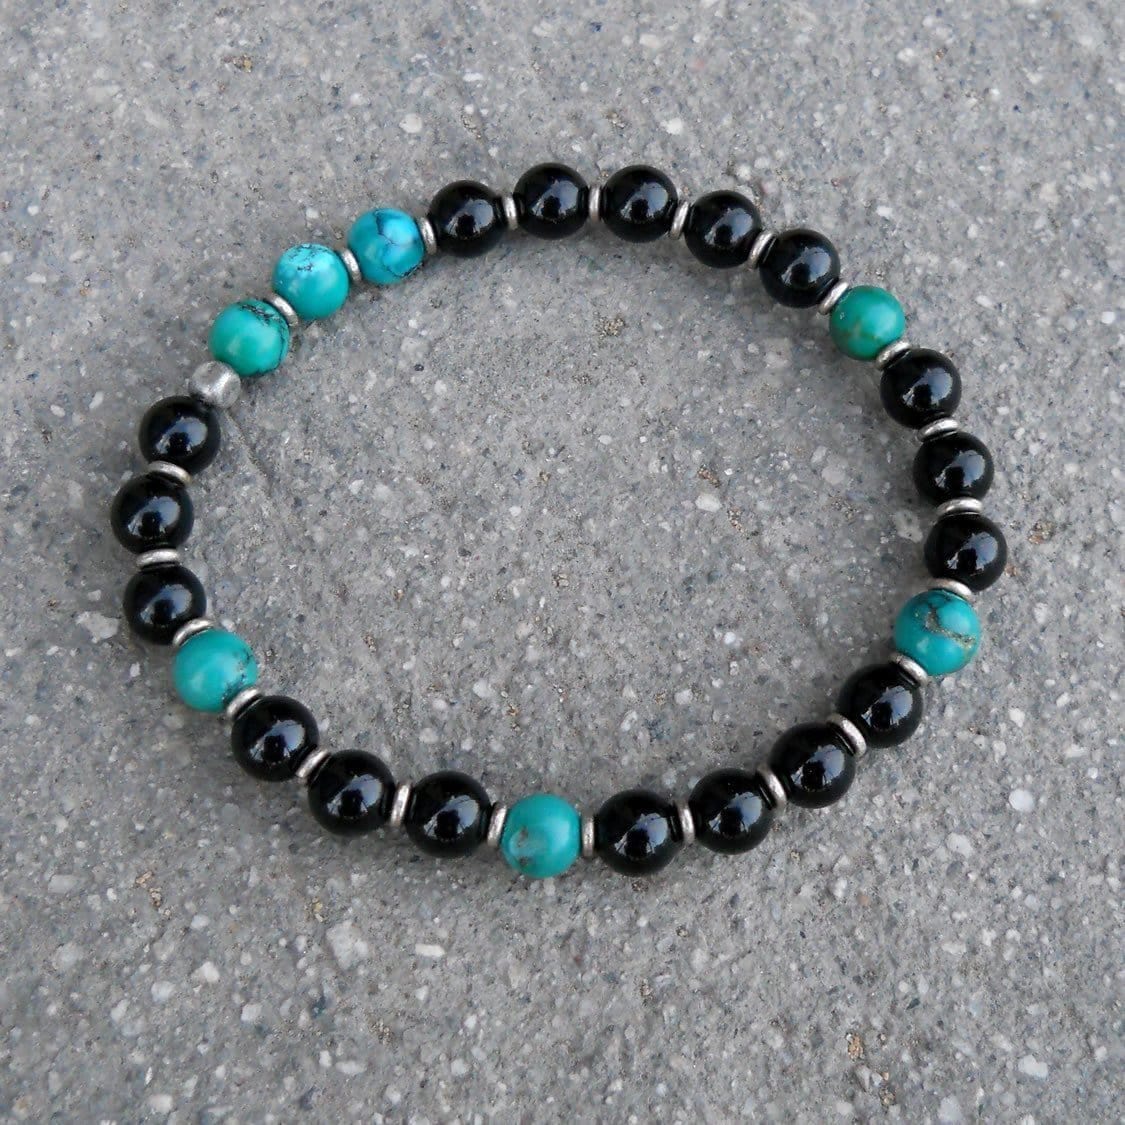 Bracelets - Communication And Patience, Turquoise And Onyx Mala Bracelet